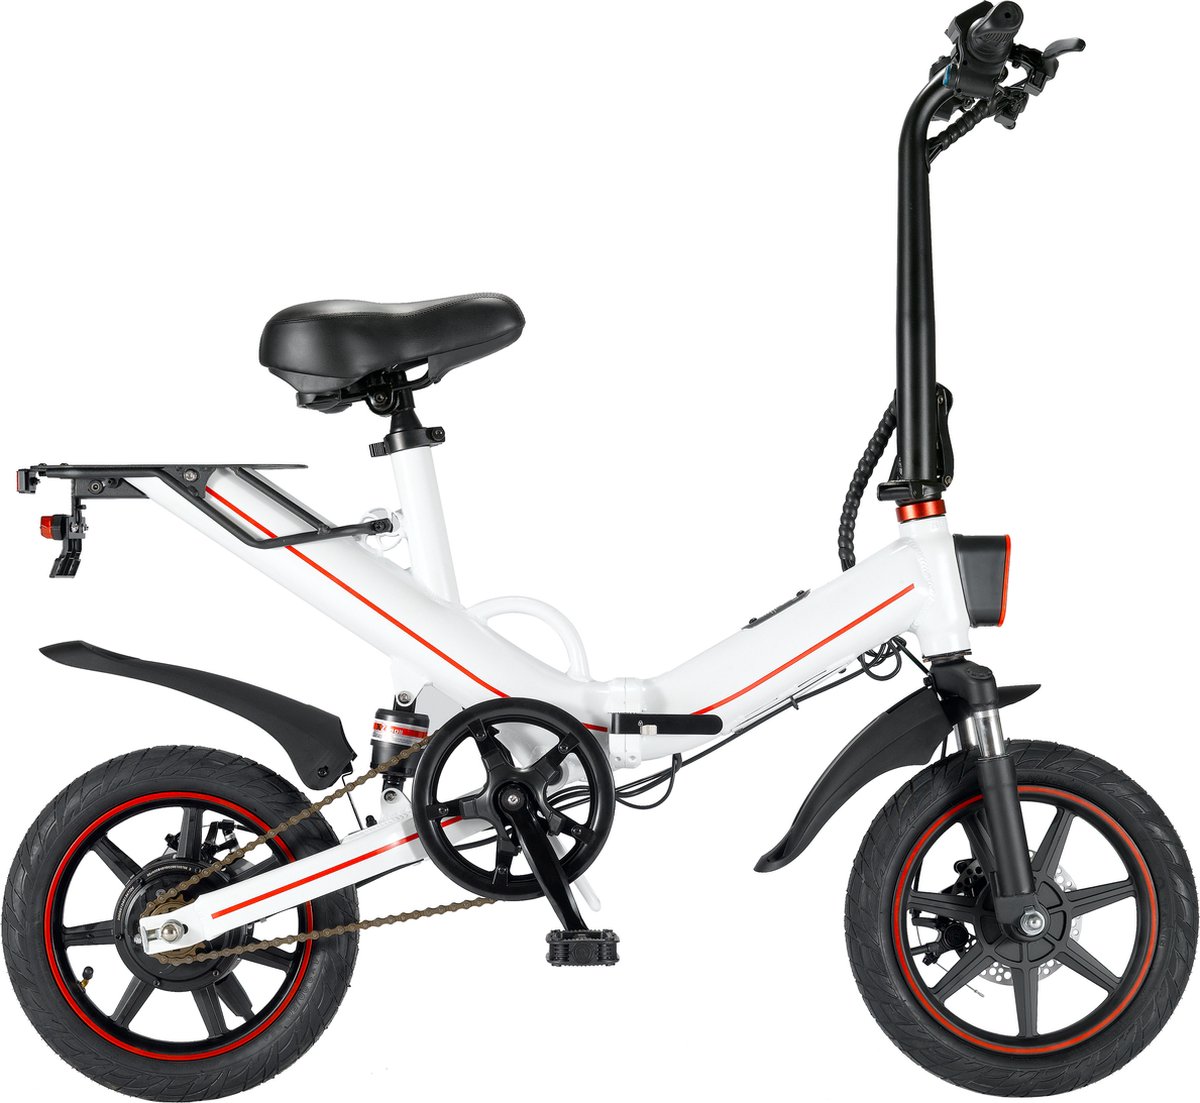 OUXI V1 PRO E Bike Elektrische Fiets vouwfiets met Lithium ion accu 7.8ah 250W motor(Wit )